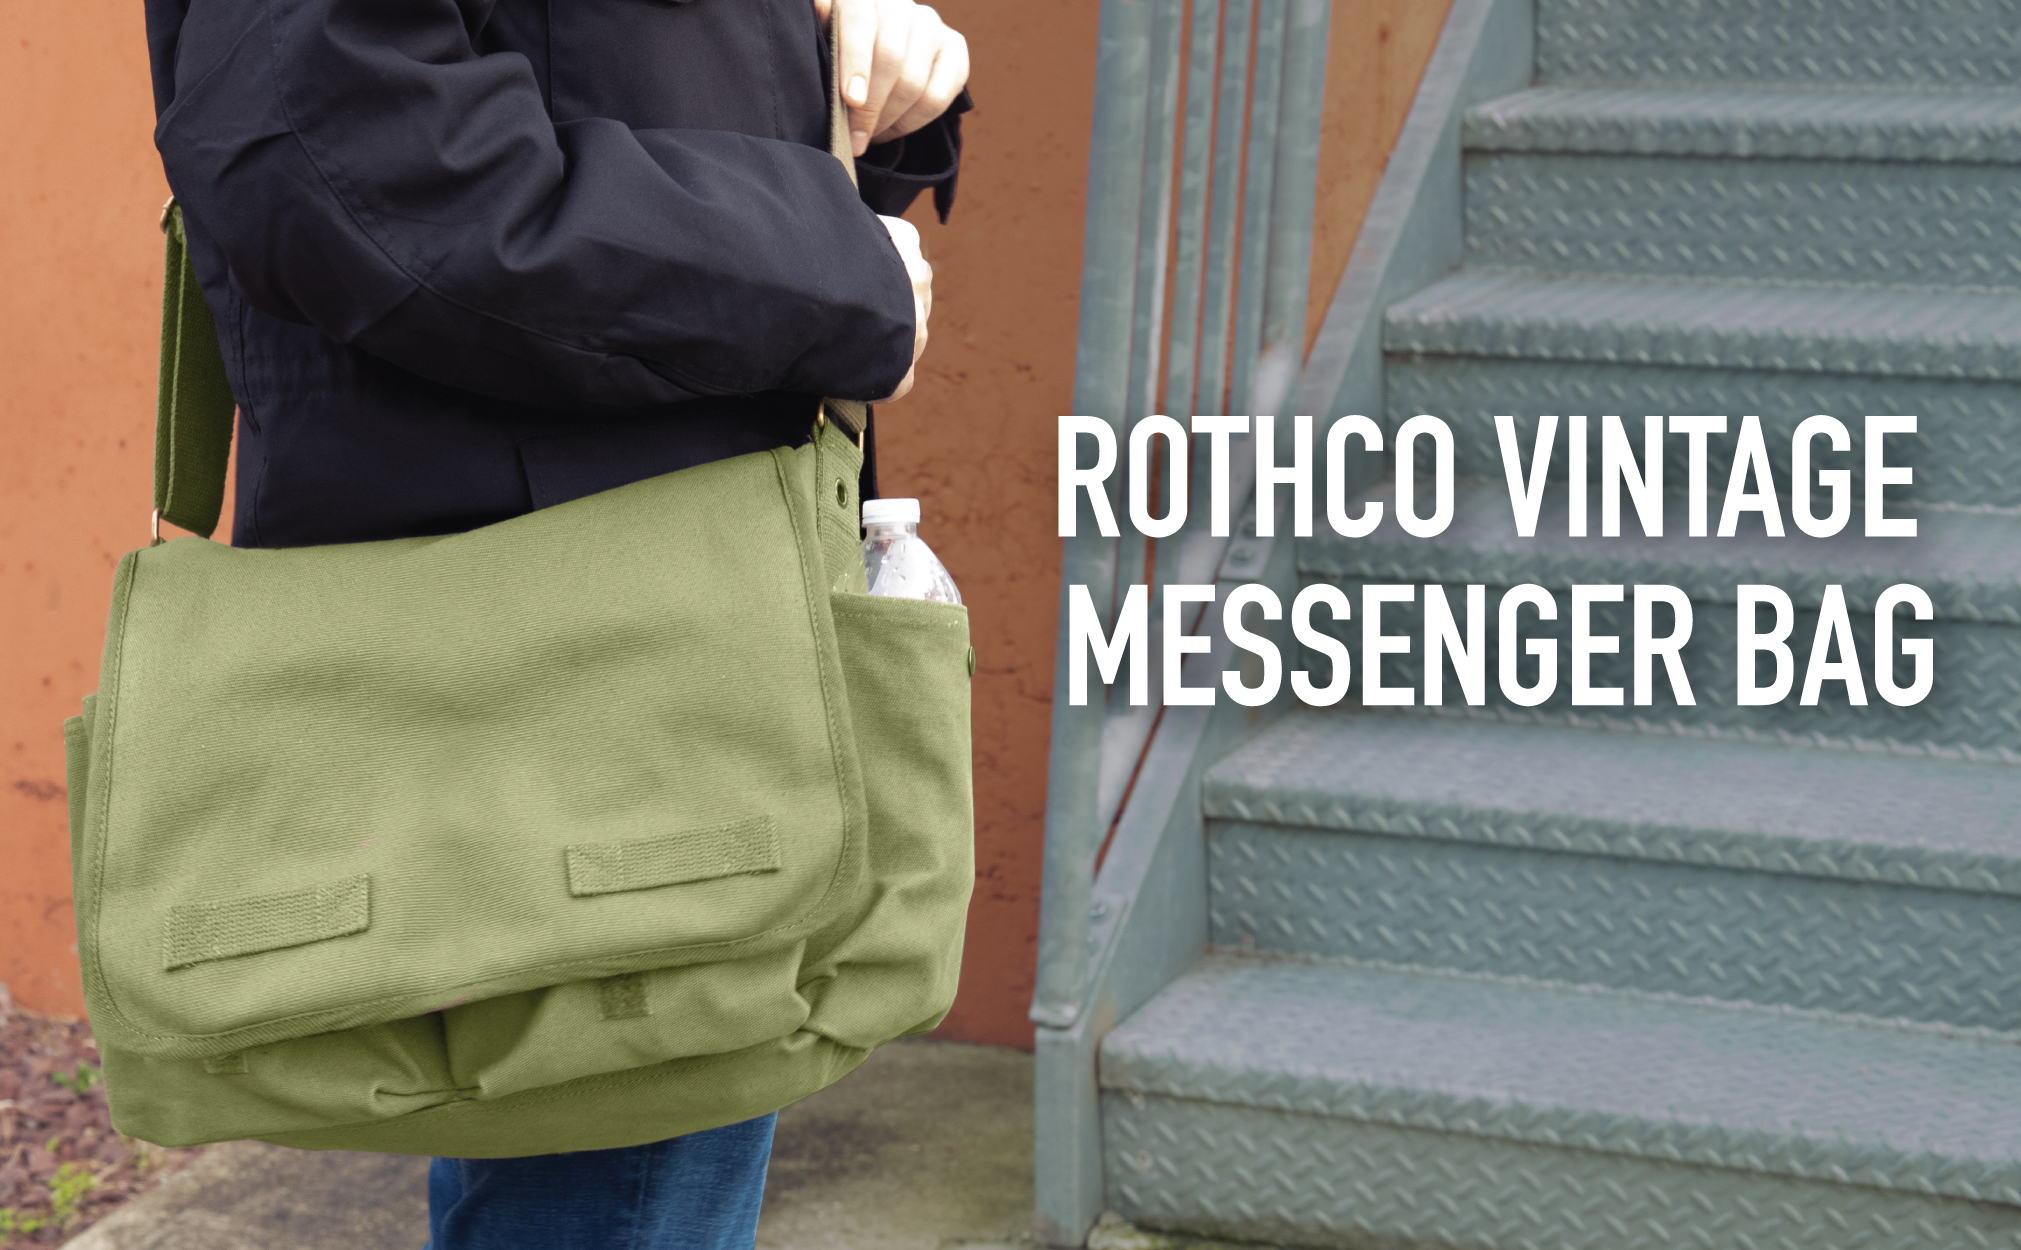 Rothco Classic Canvas Messenger Bag, Pink - image 3 of 3